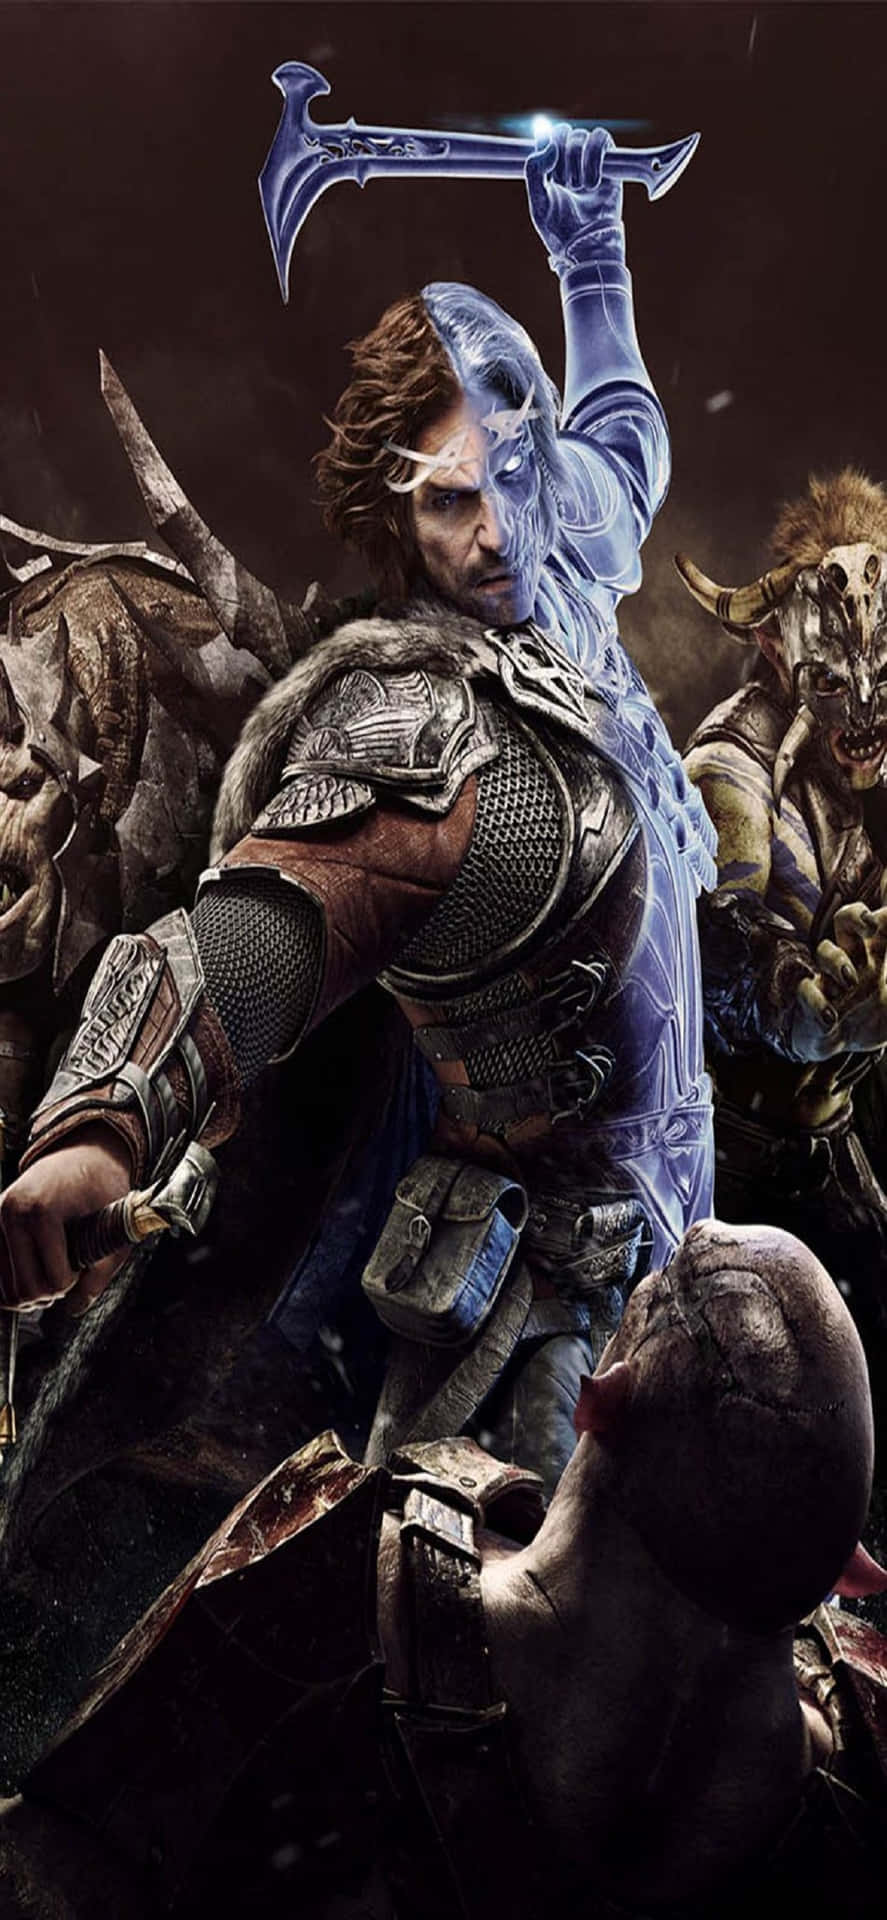 Heraldic Battle in the Shadow of Mordor - iPhone X Background